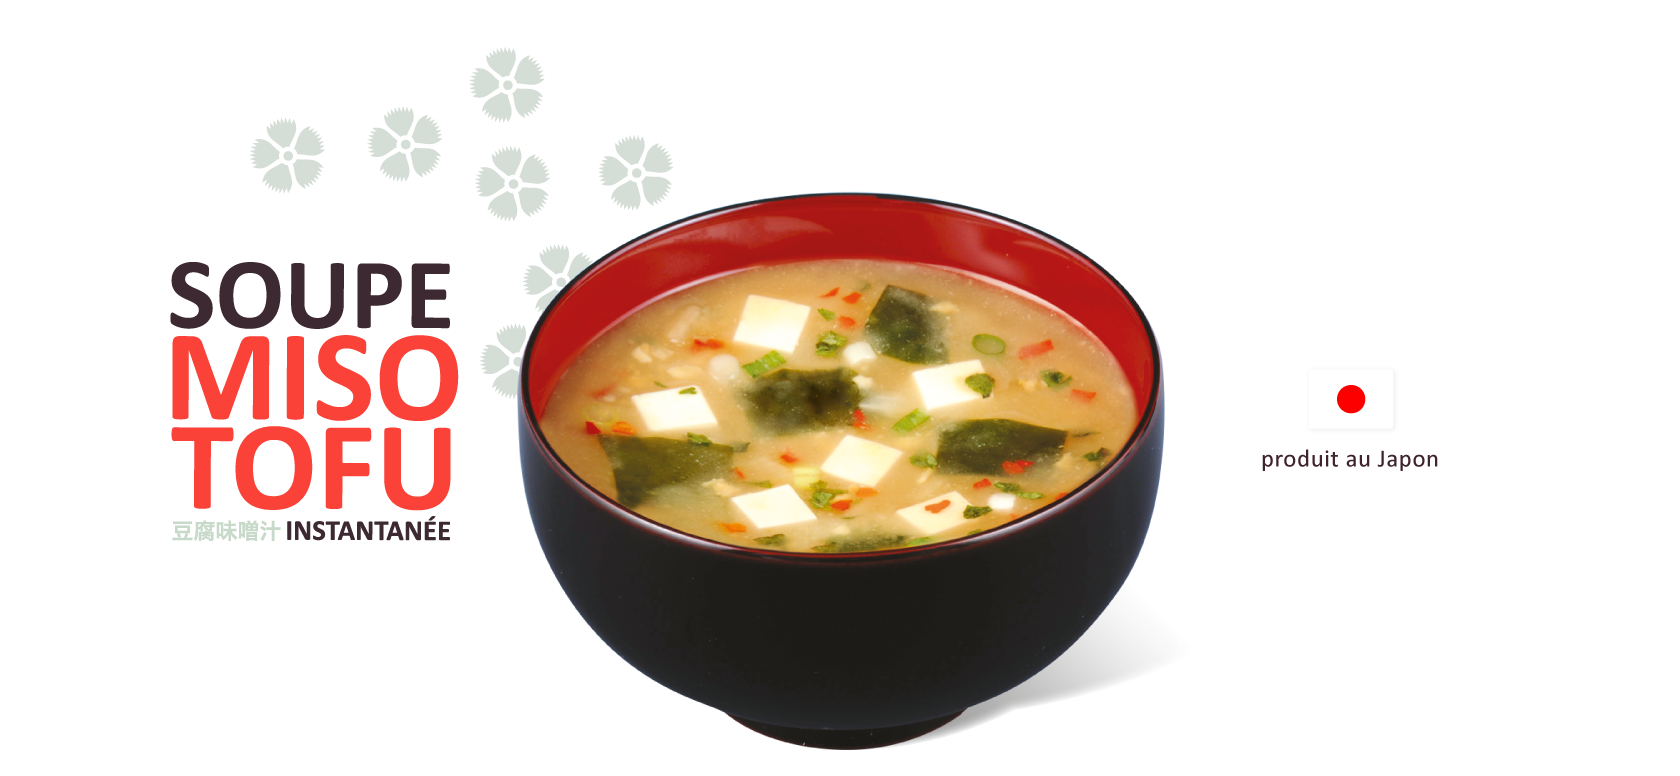 Soupe miso de tofu, gingembre et shiitake